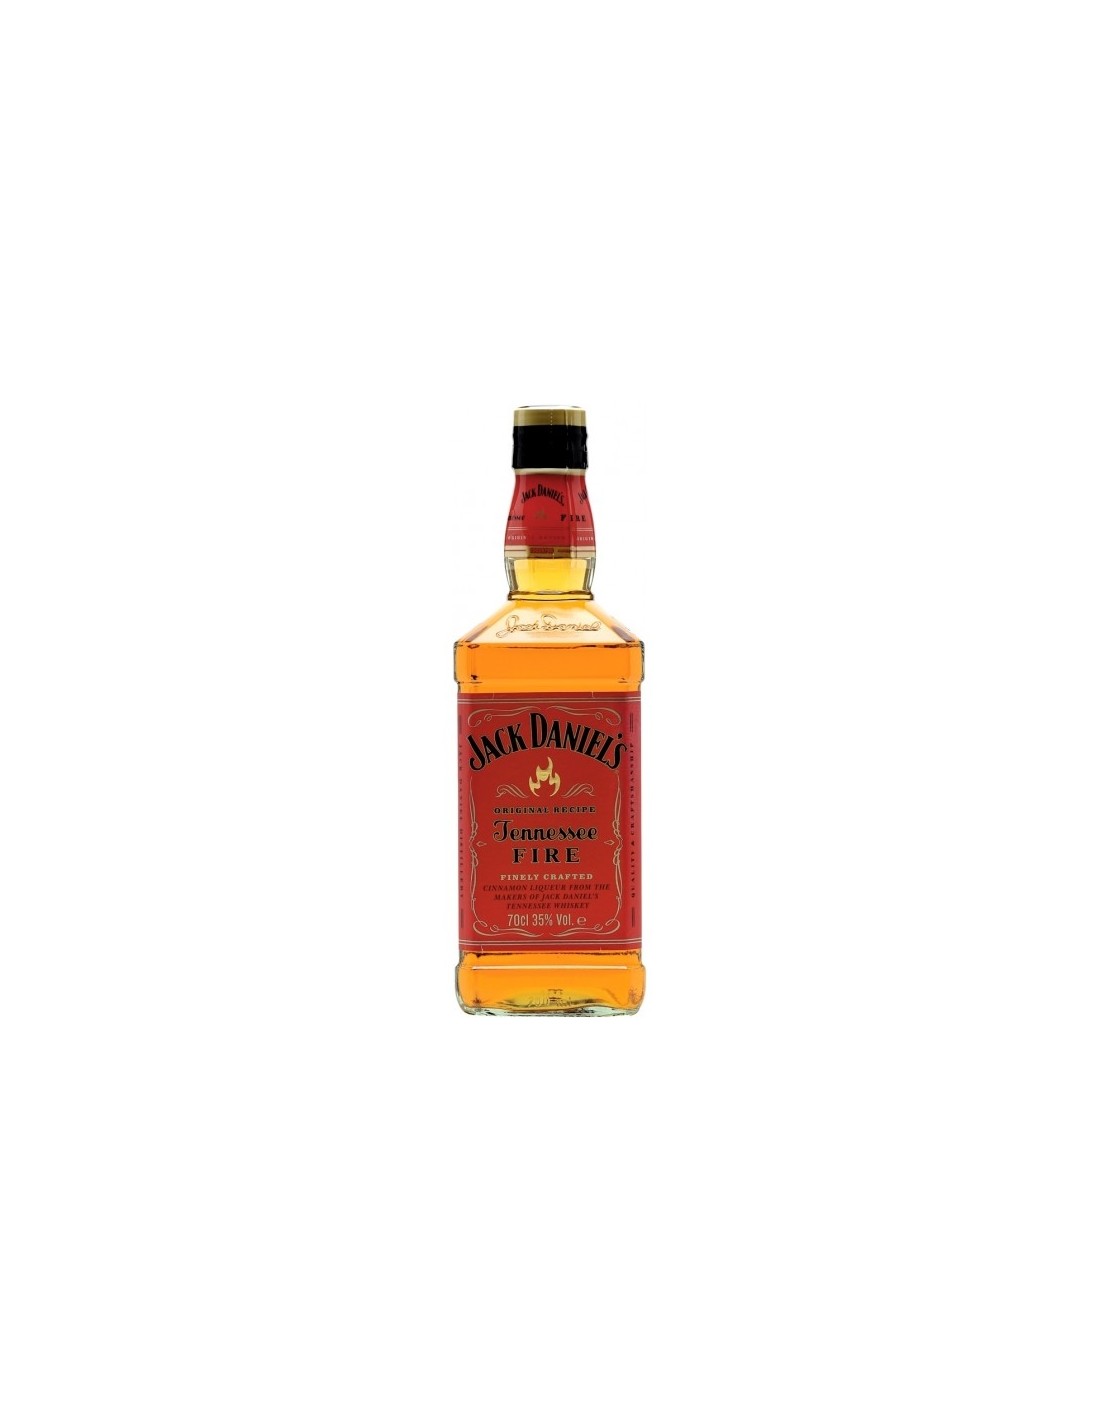 Whisky Bourbon Jack Daniel's Fire, 35% alc., 0.7L, America